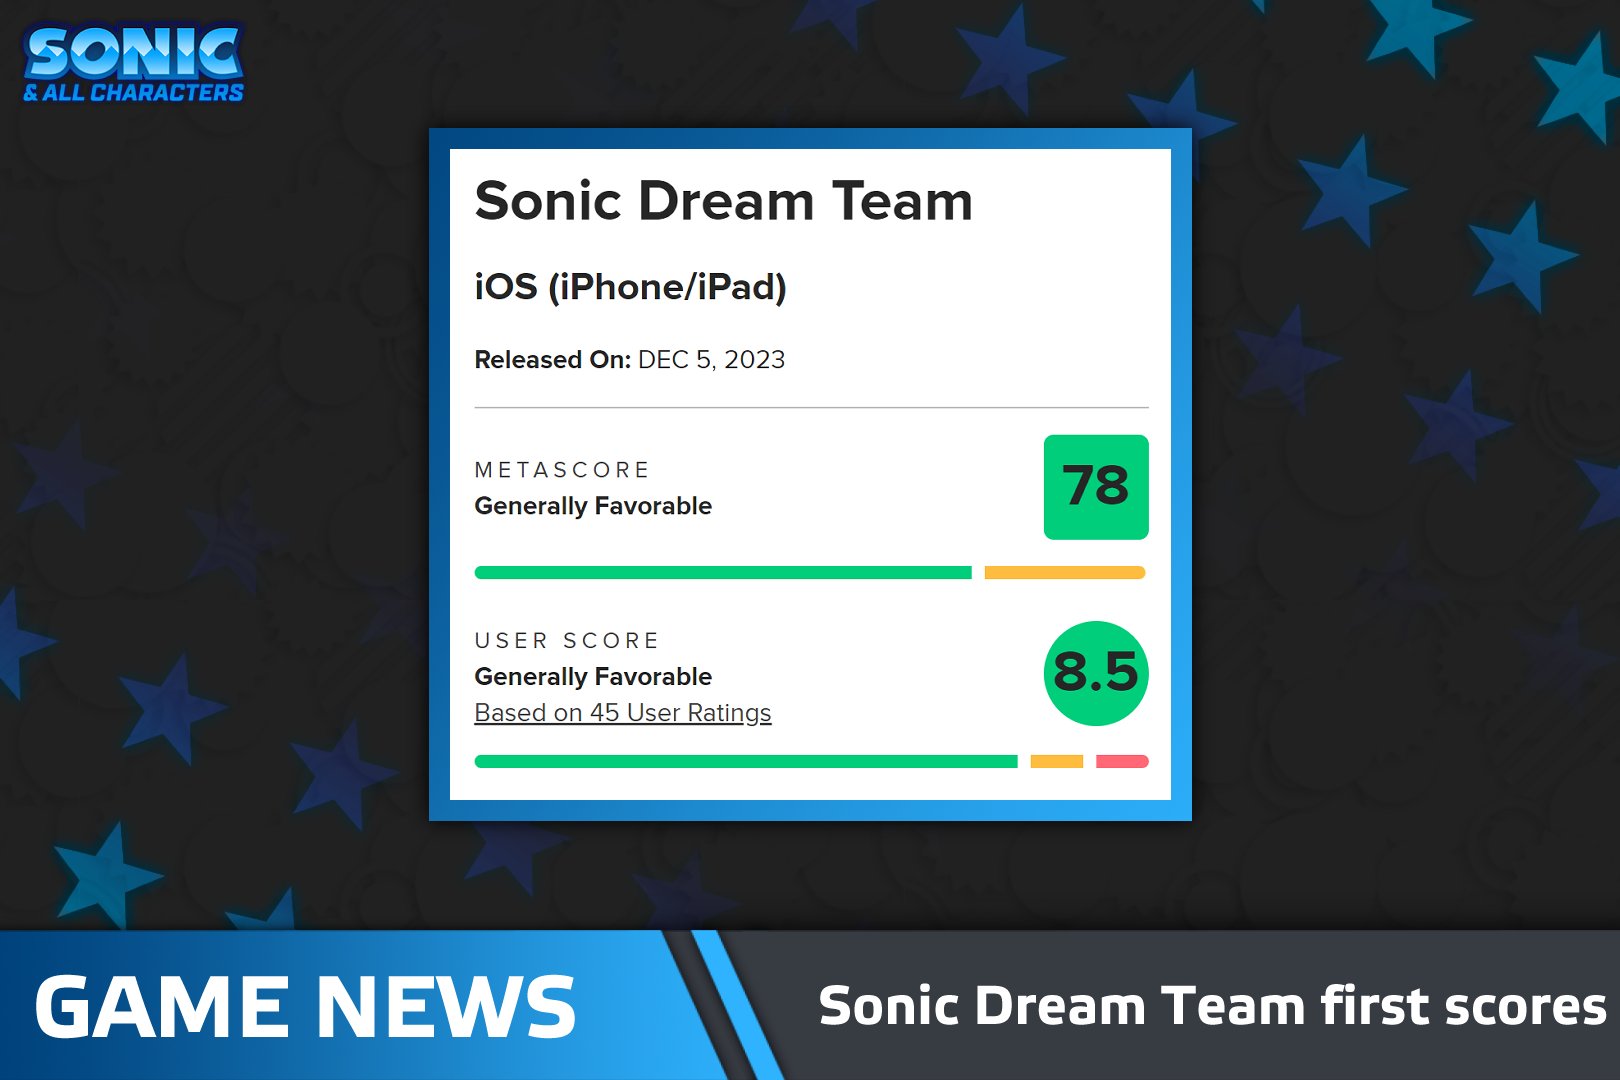 Sonic Origins Full Playthrough (100% All Emeralds in all 4 games) 4K 